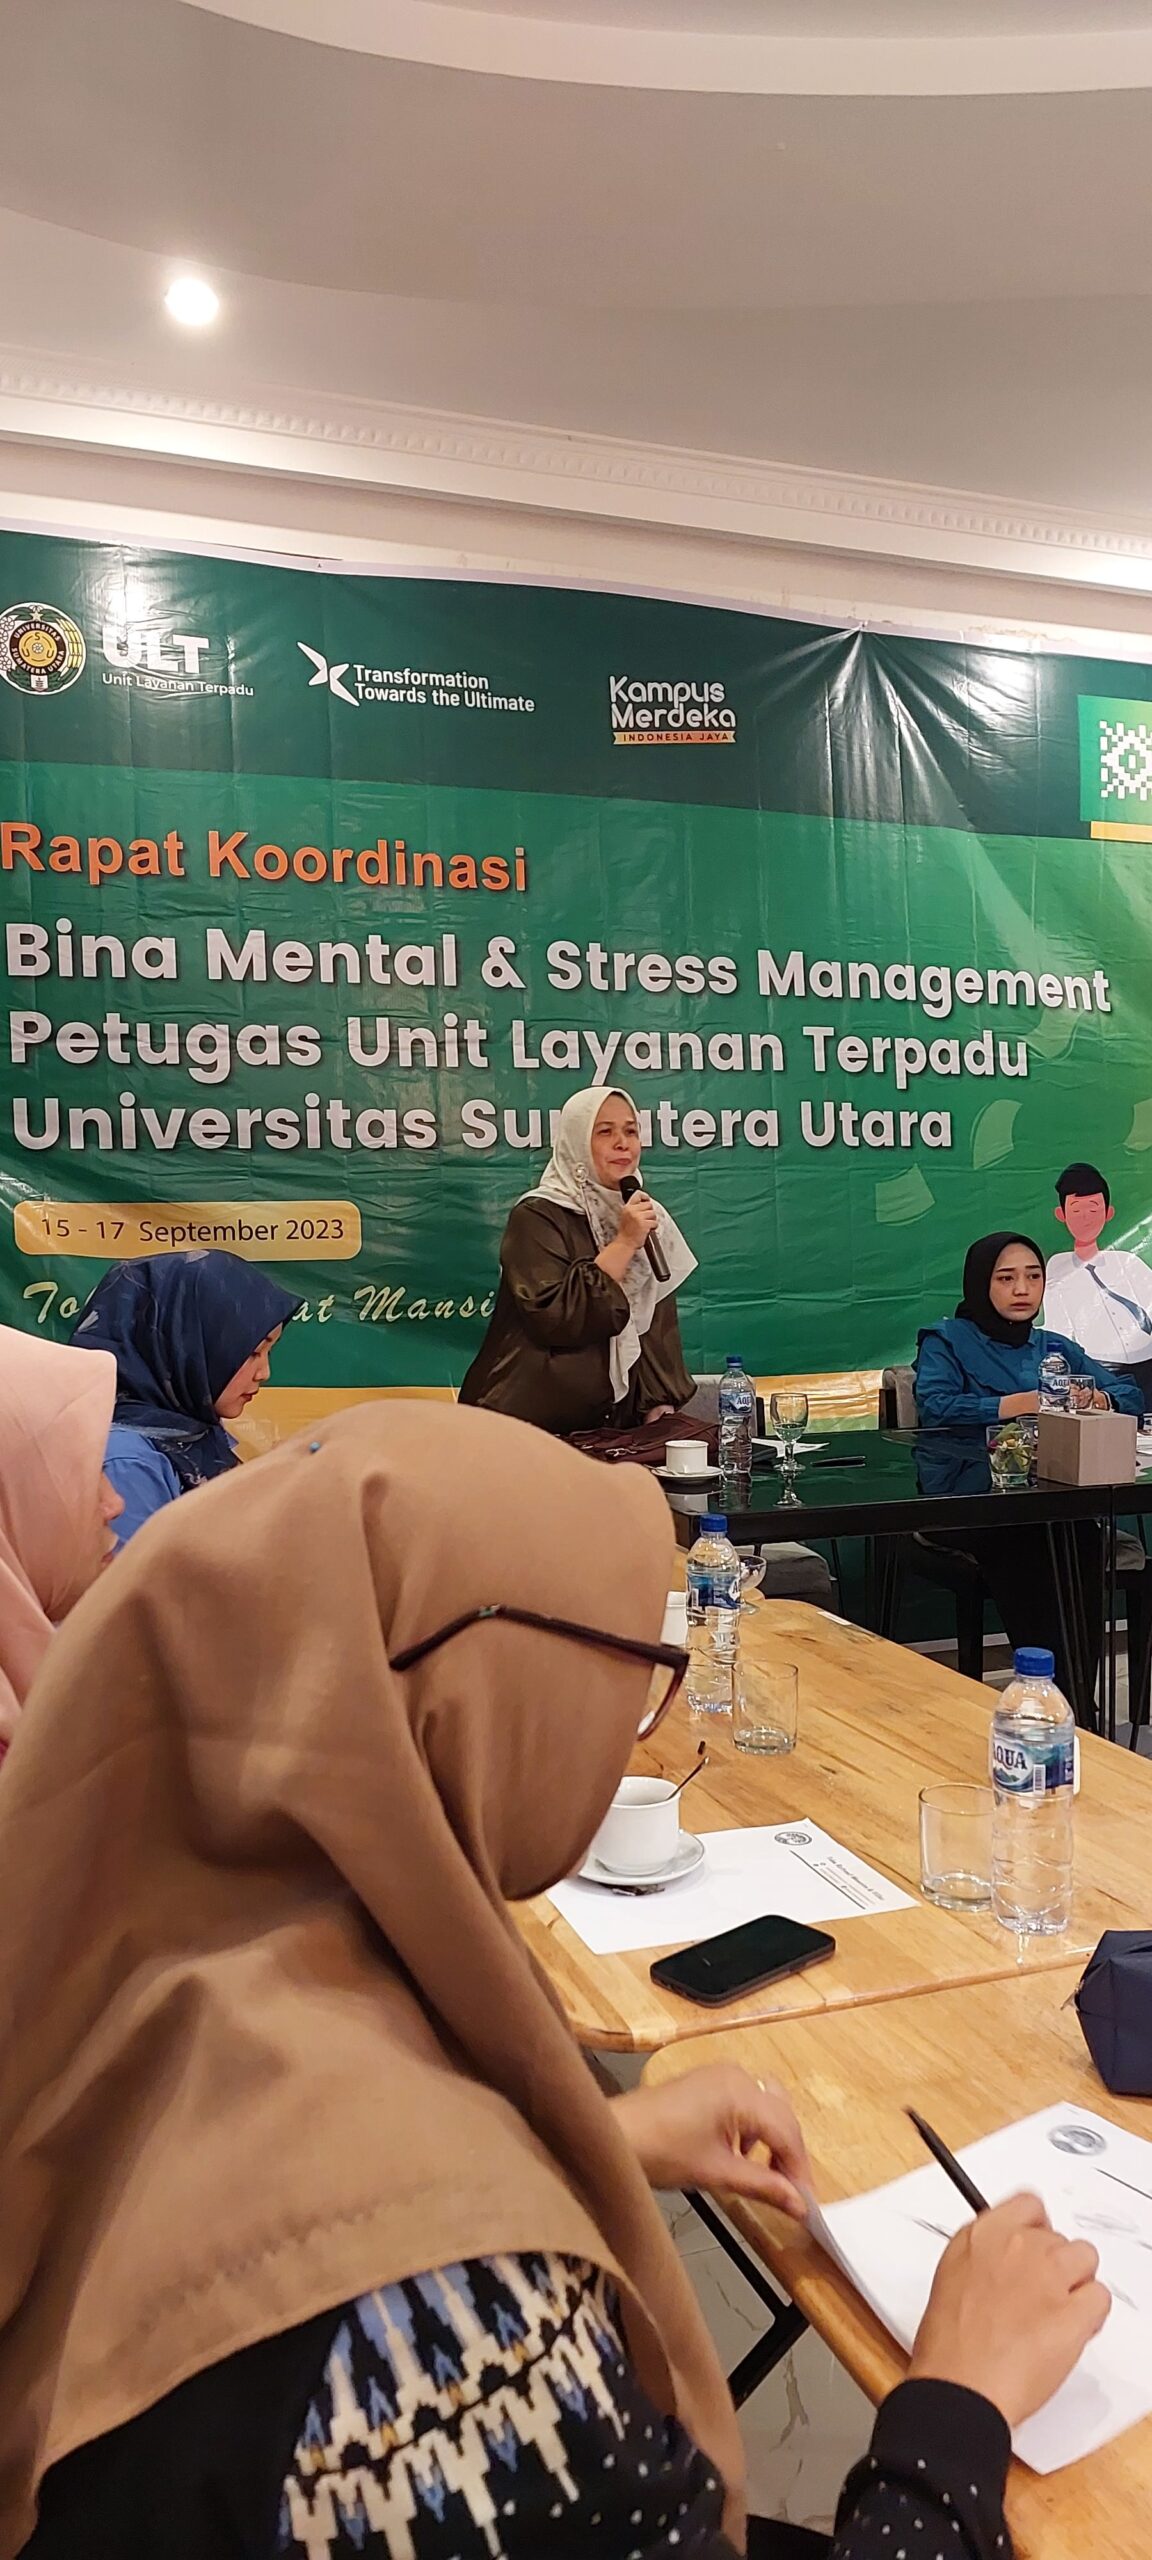 You are currently viewing Rapat Koordinasi Bina Mental & Stress Management pada Petugas Unit Layanan Terpadu Universitas Sumatera Utara